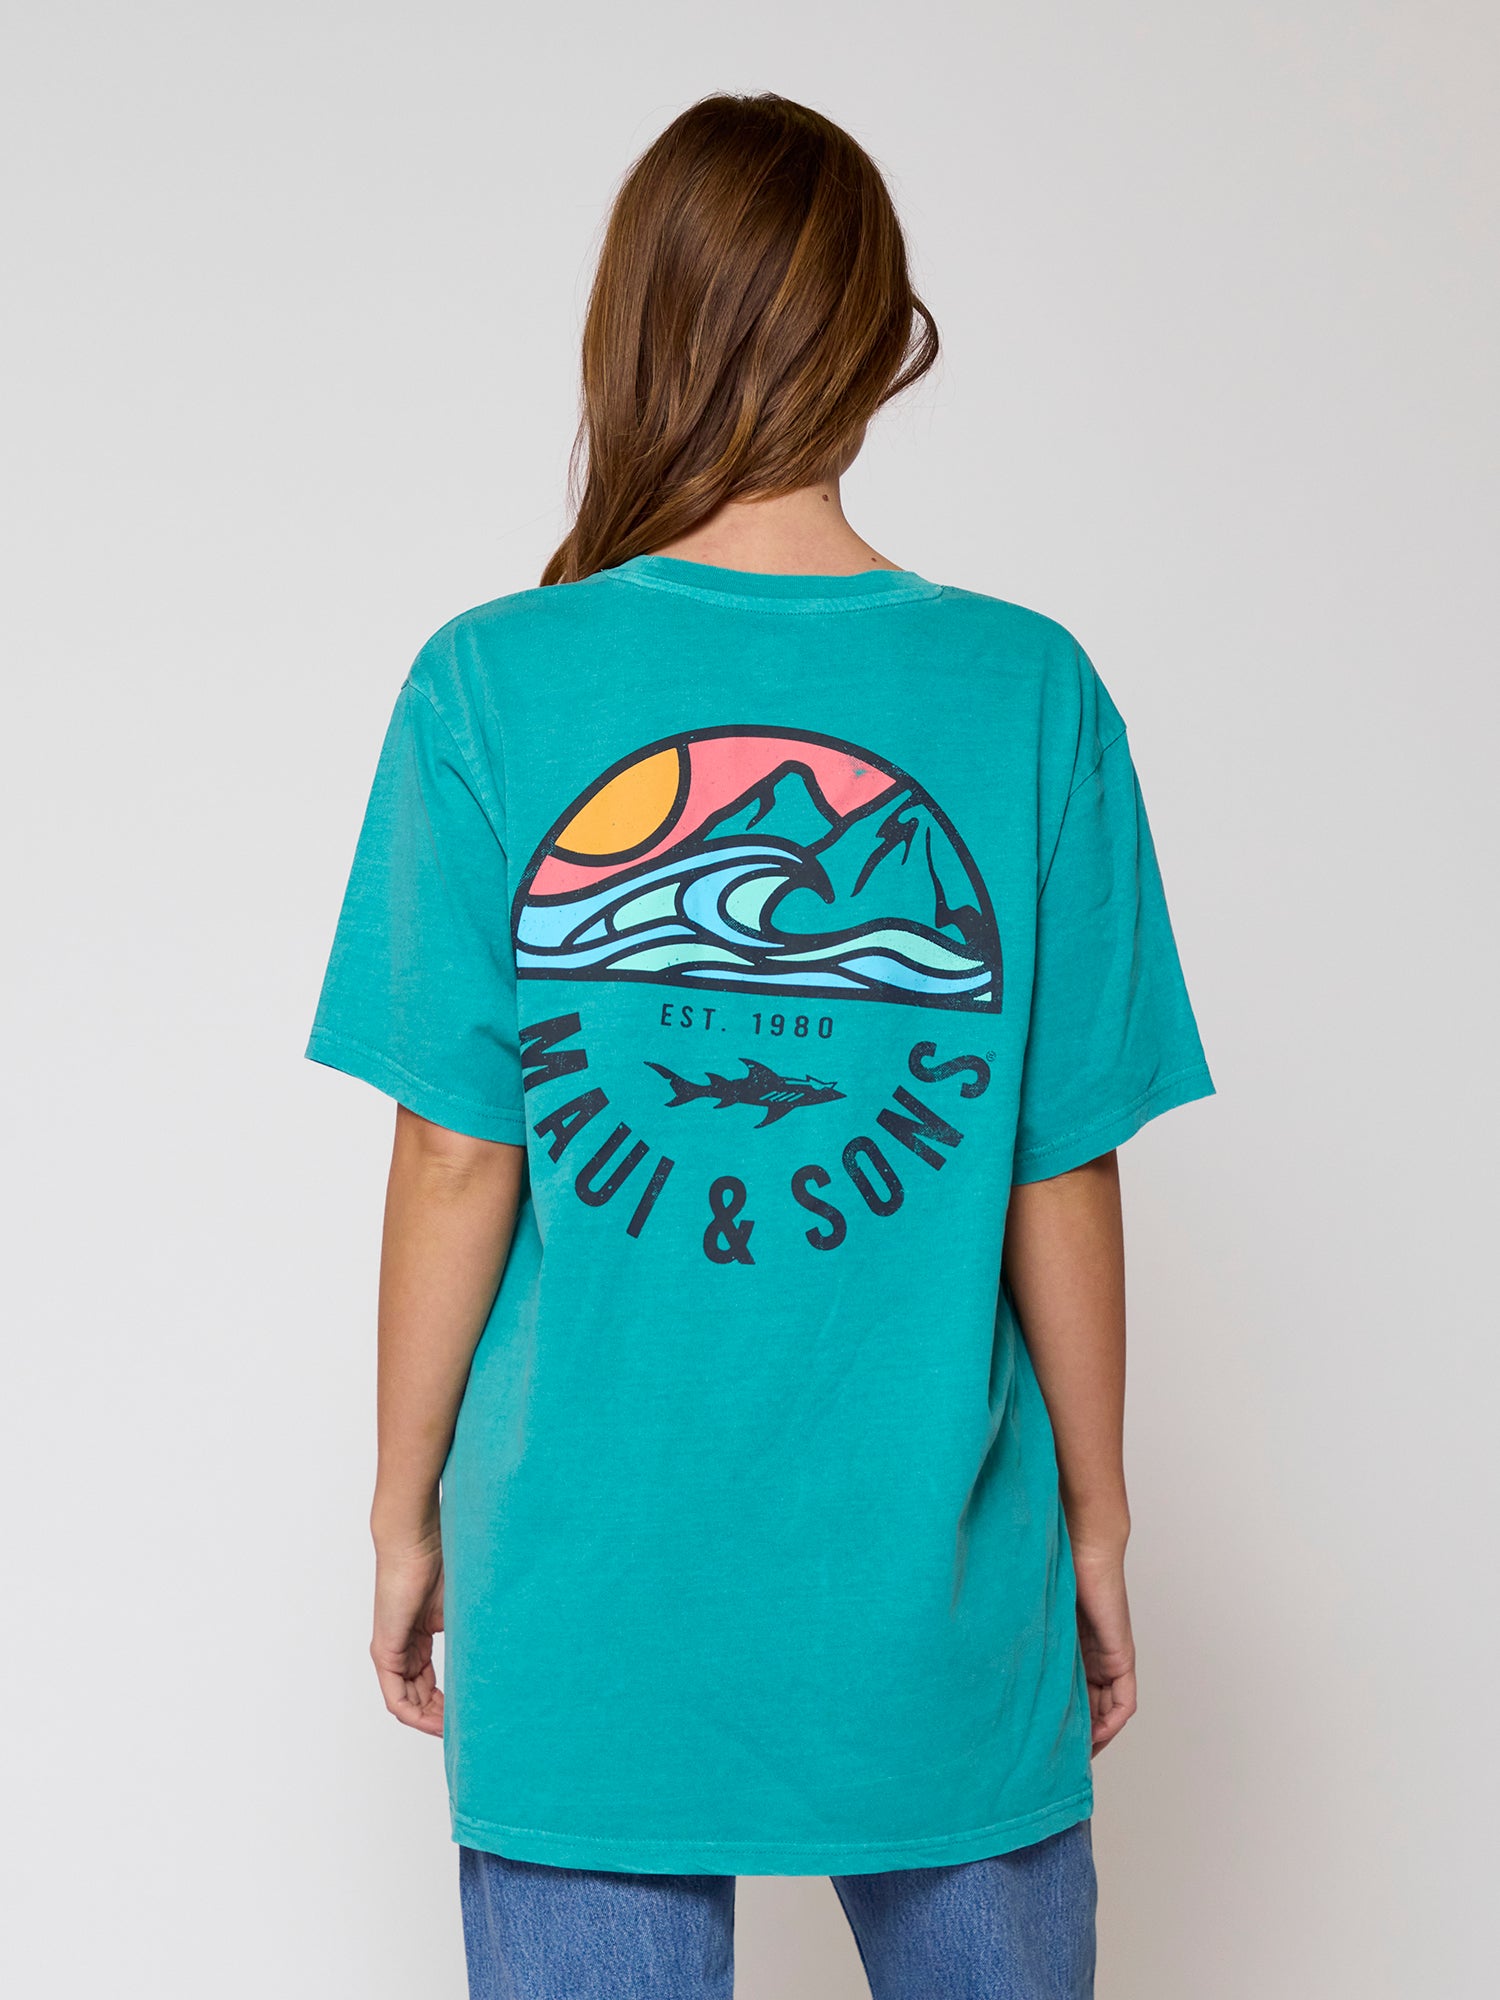 All Season Unisex T-Shirt in Capri